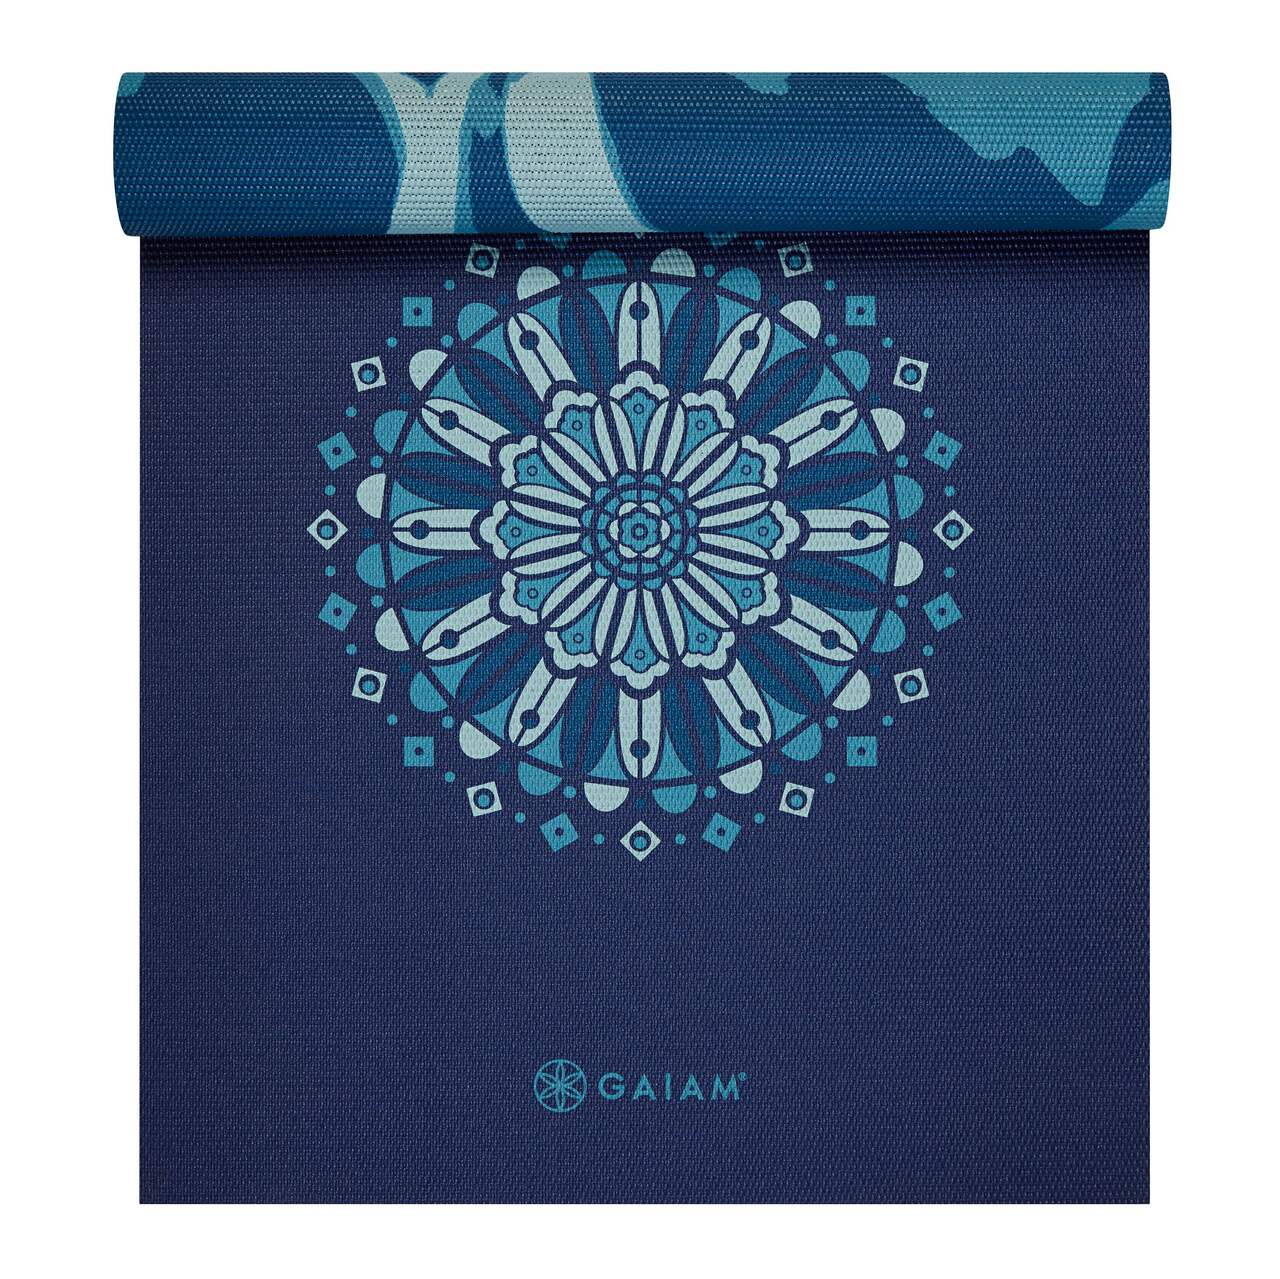 Gaiam Reversible Yoga Mat, 6mm, Kaleidoscope Sea